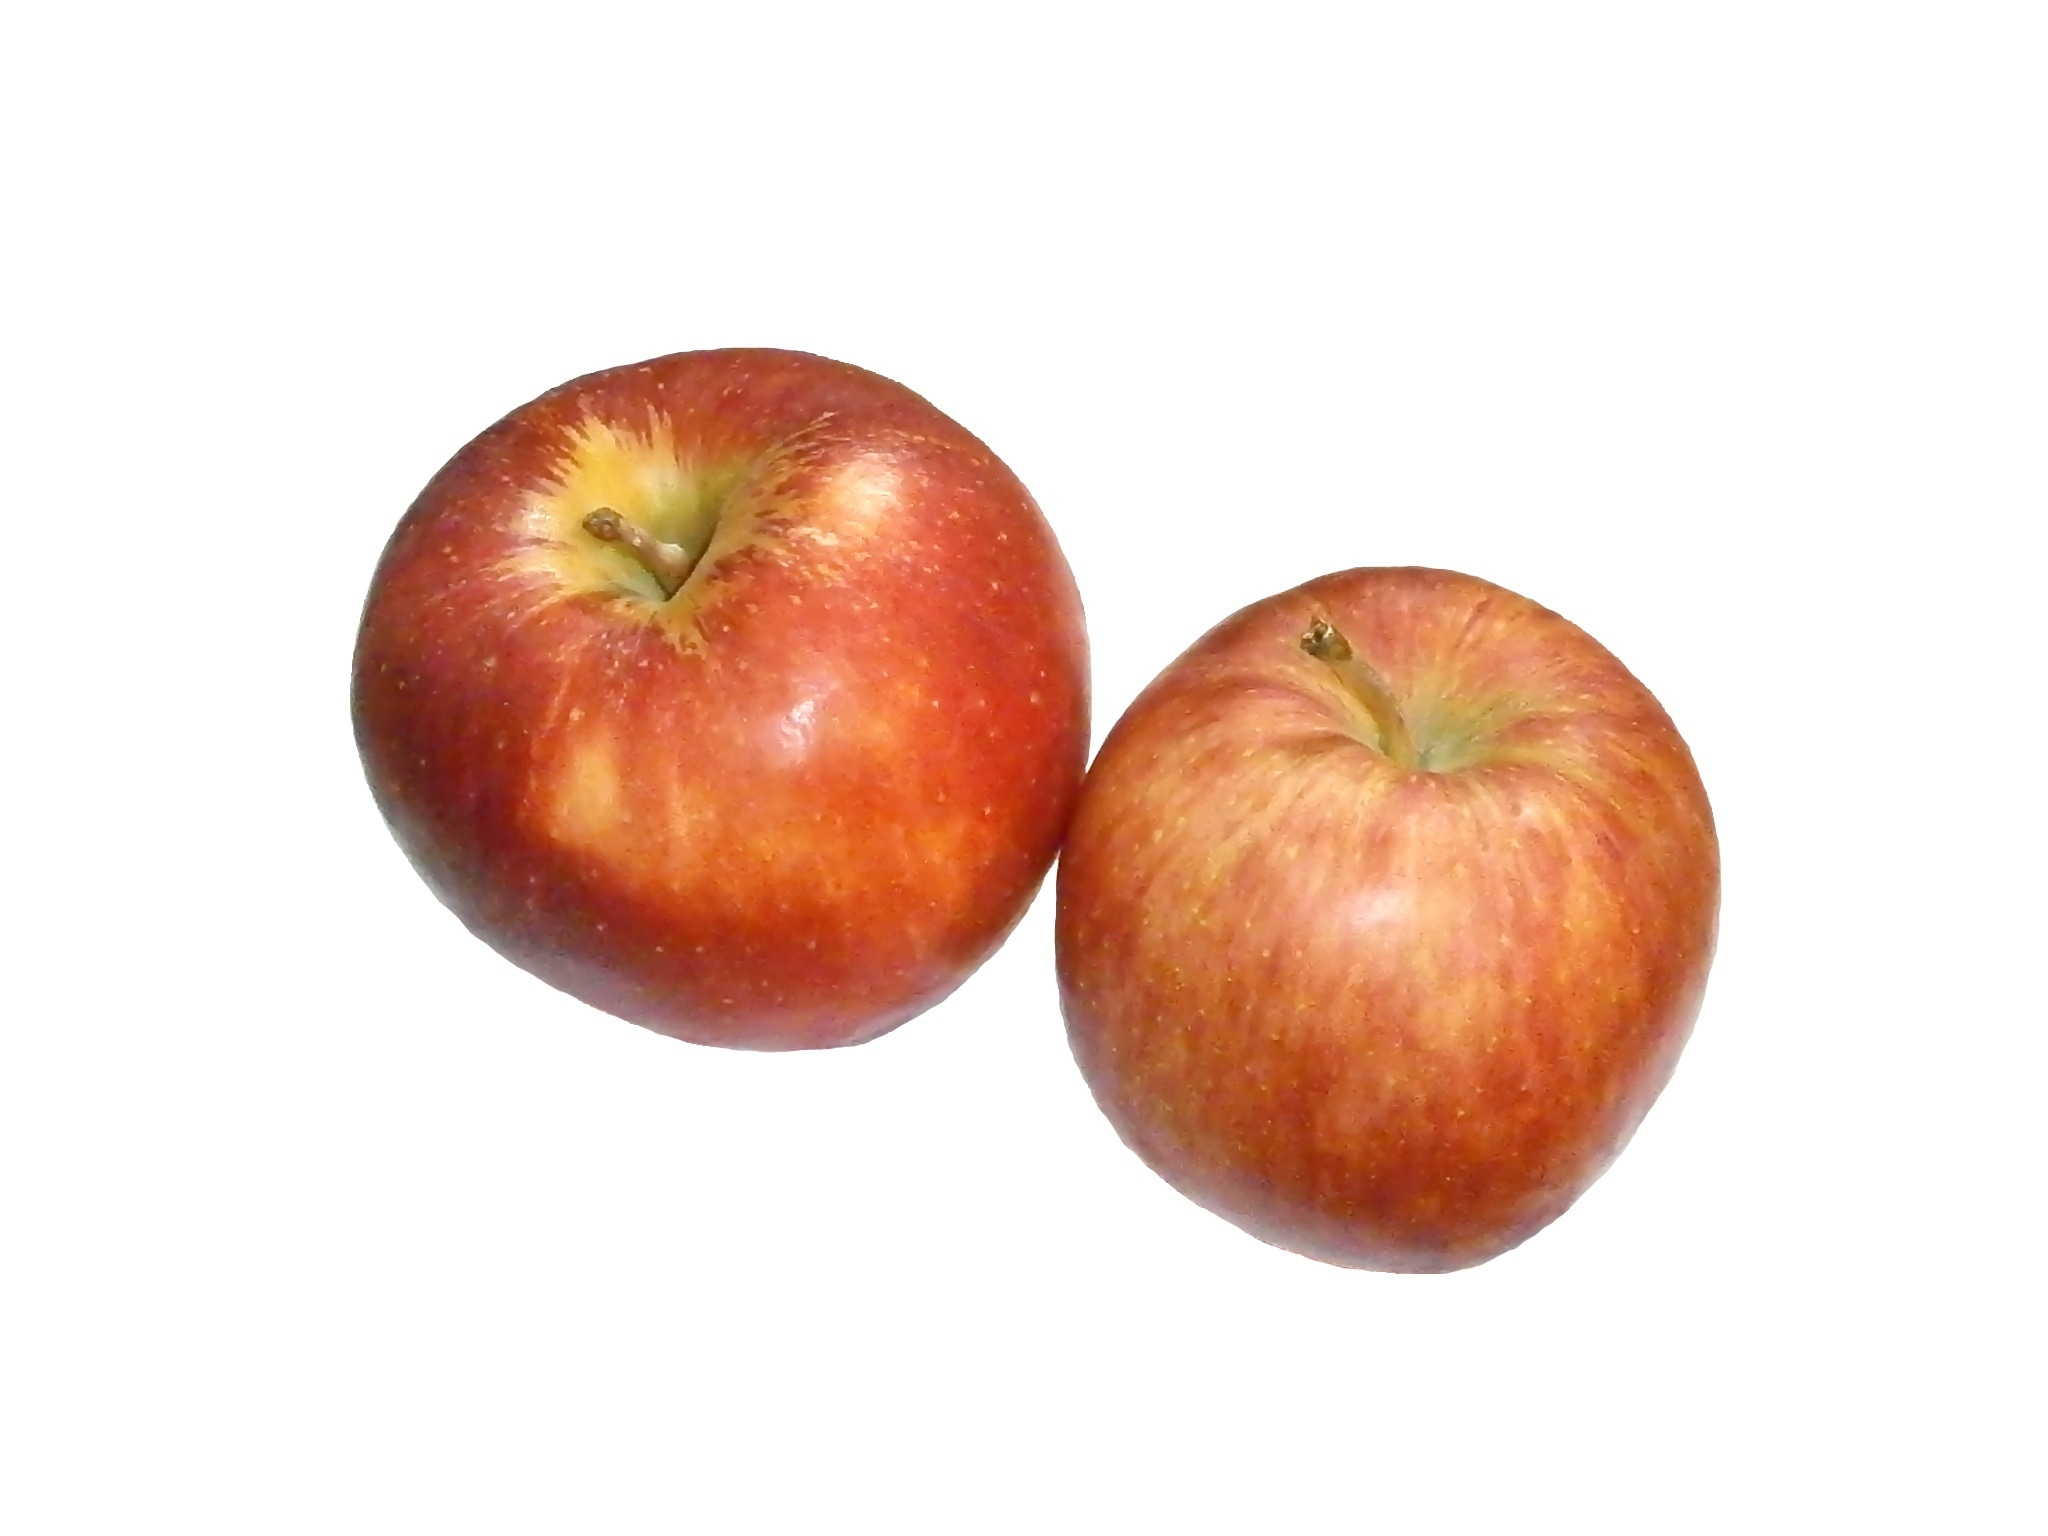 2 apple fruits